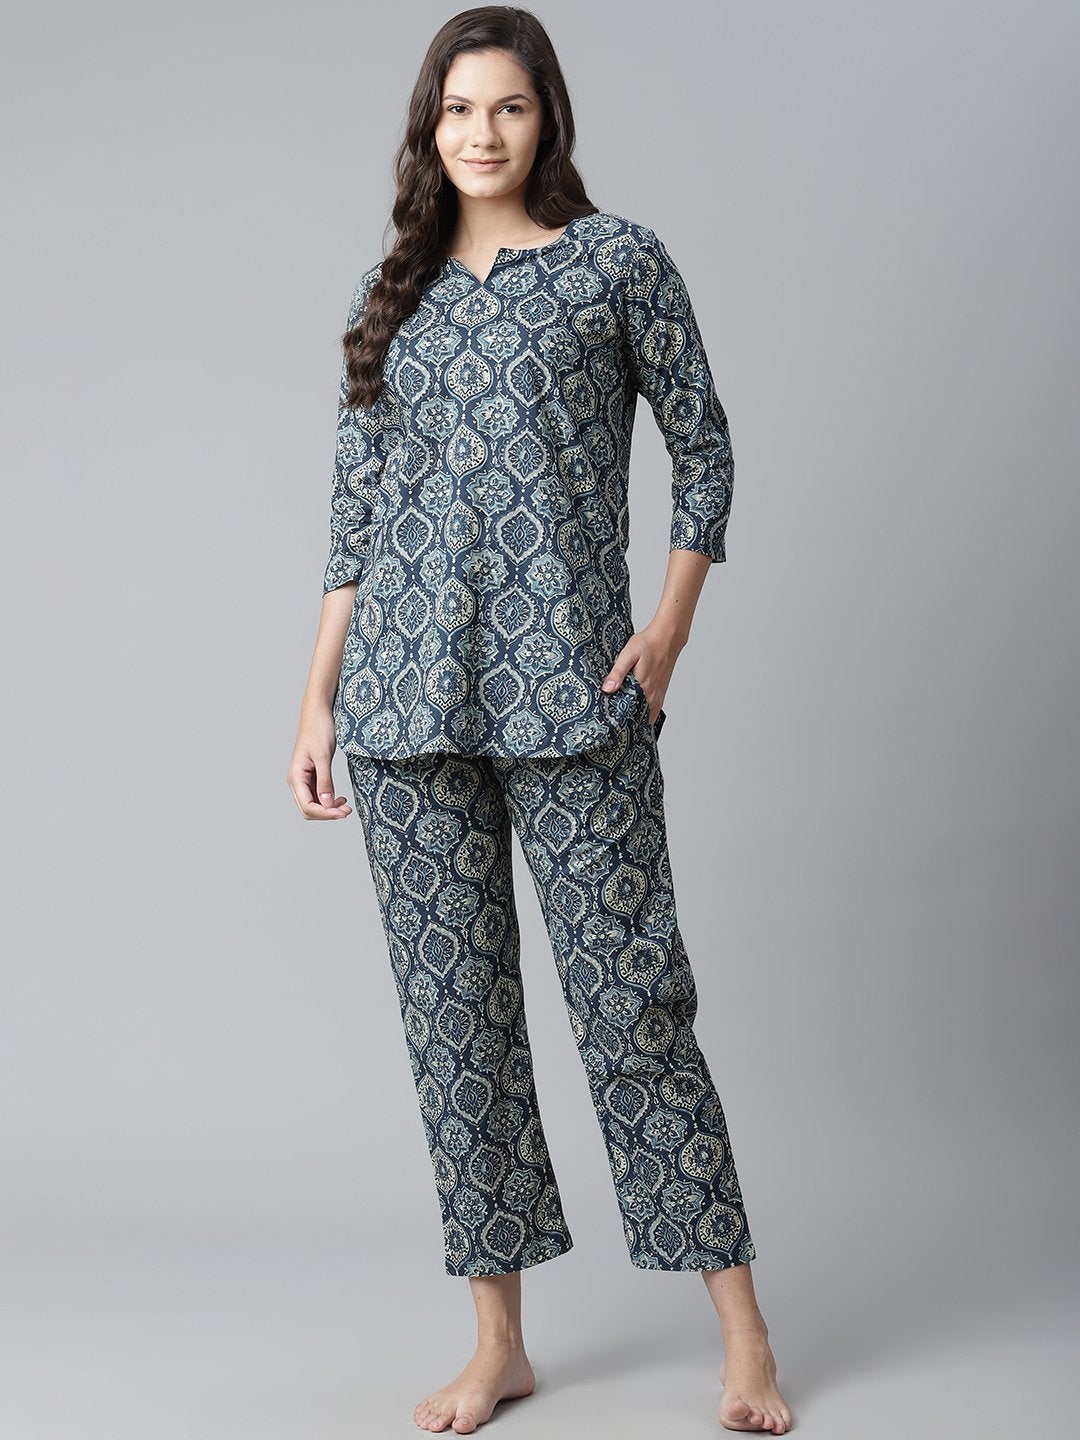 Women's Indigo Cotton Nightwear/Loungewear - Divena